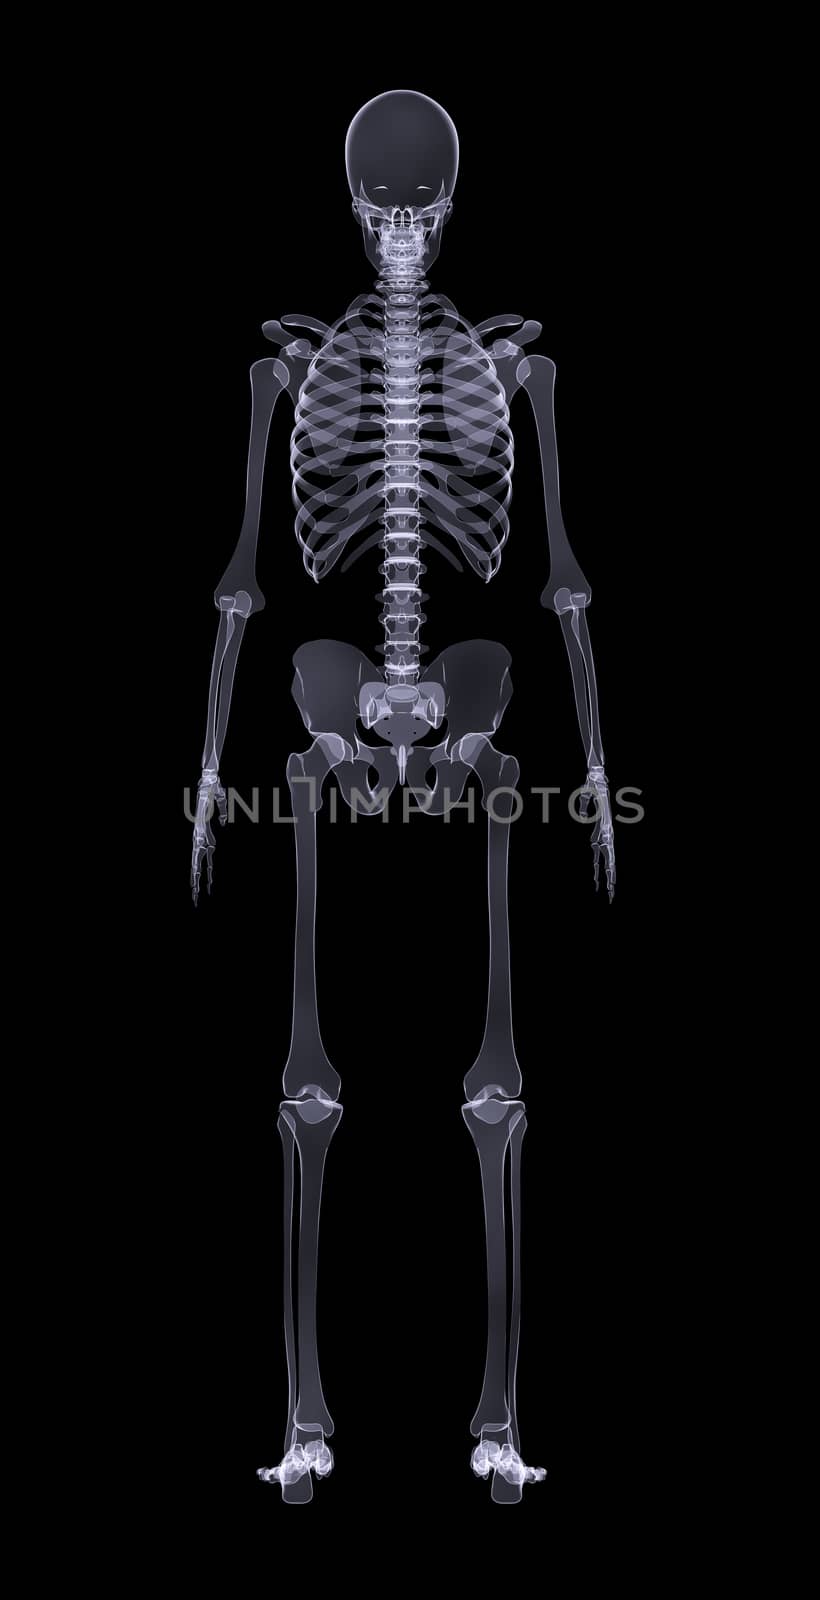 Human skeleton standing on black background, rear view